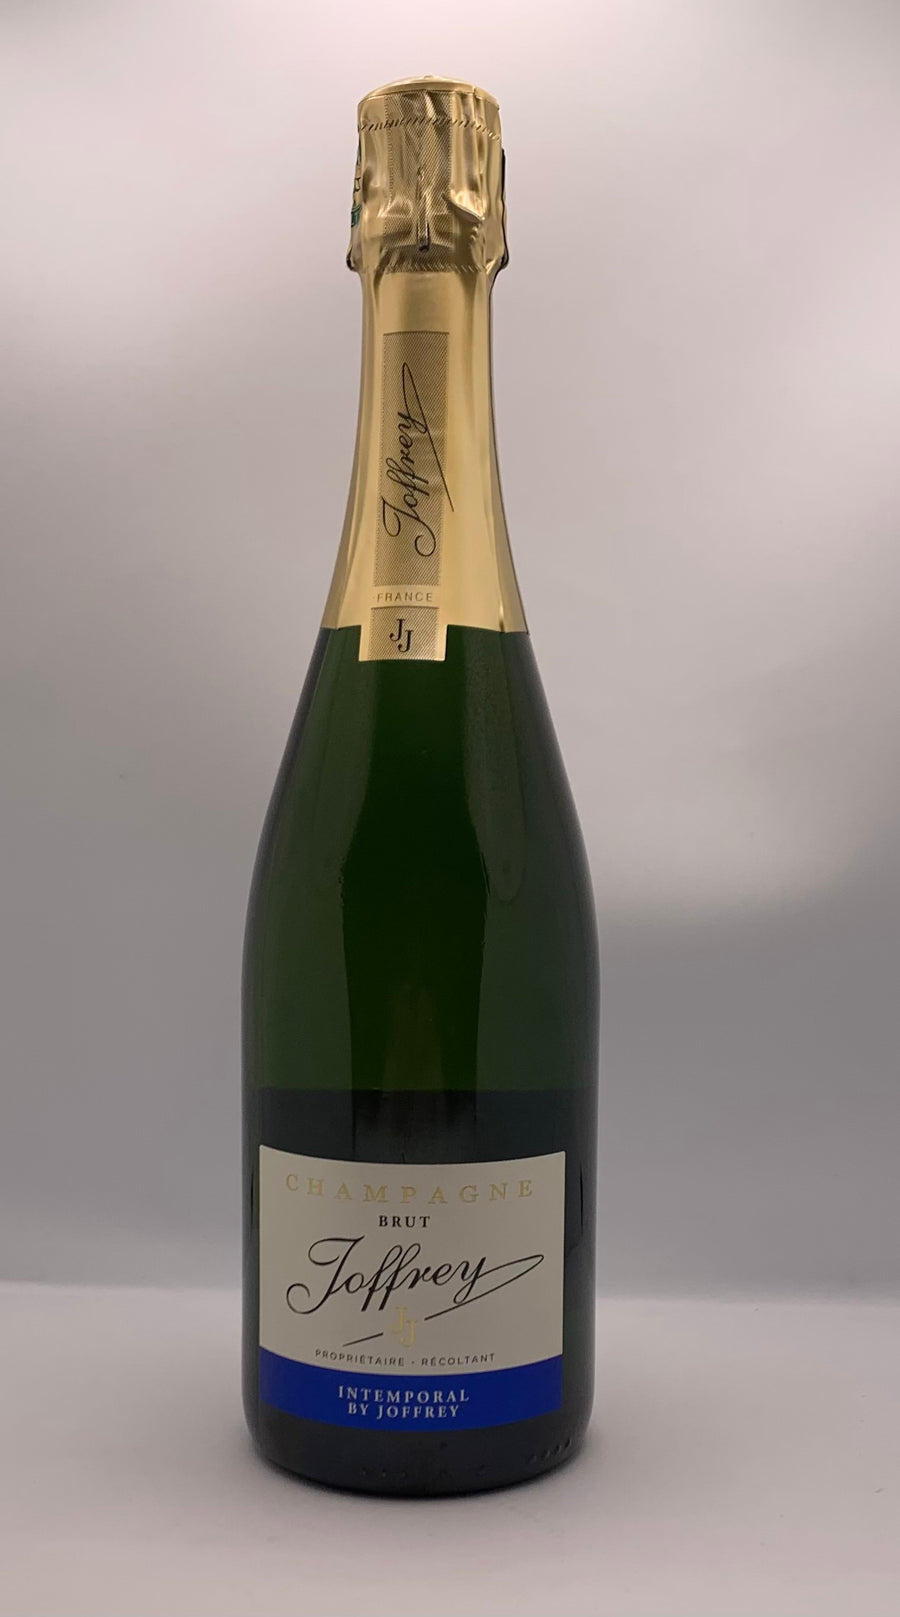 Champagne Joffrey cuvée Intemporel Brut